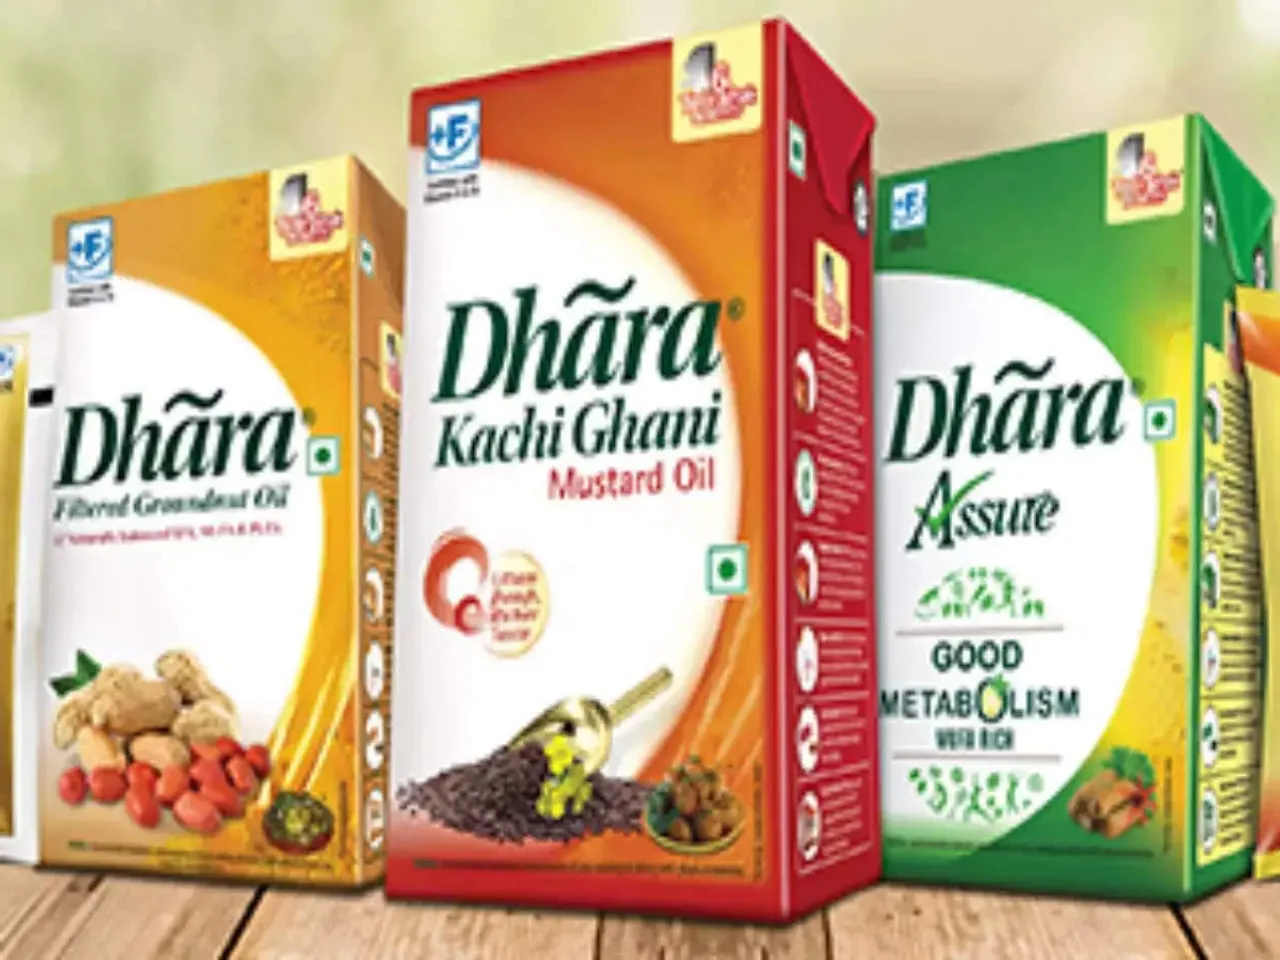 Dhara edible oils.jpg